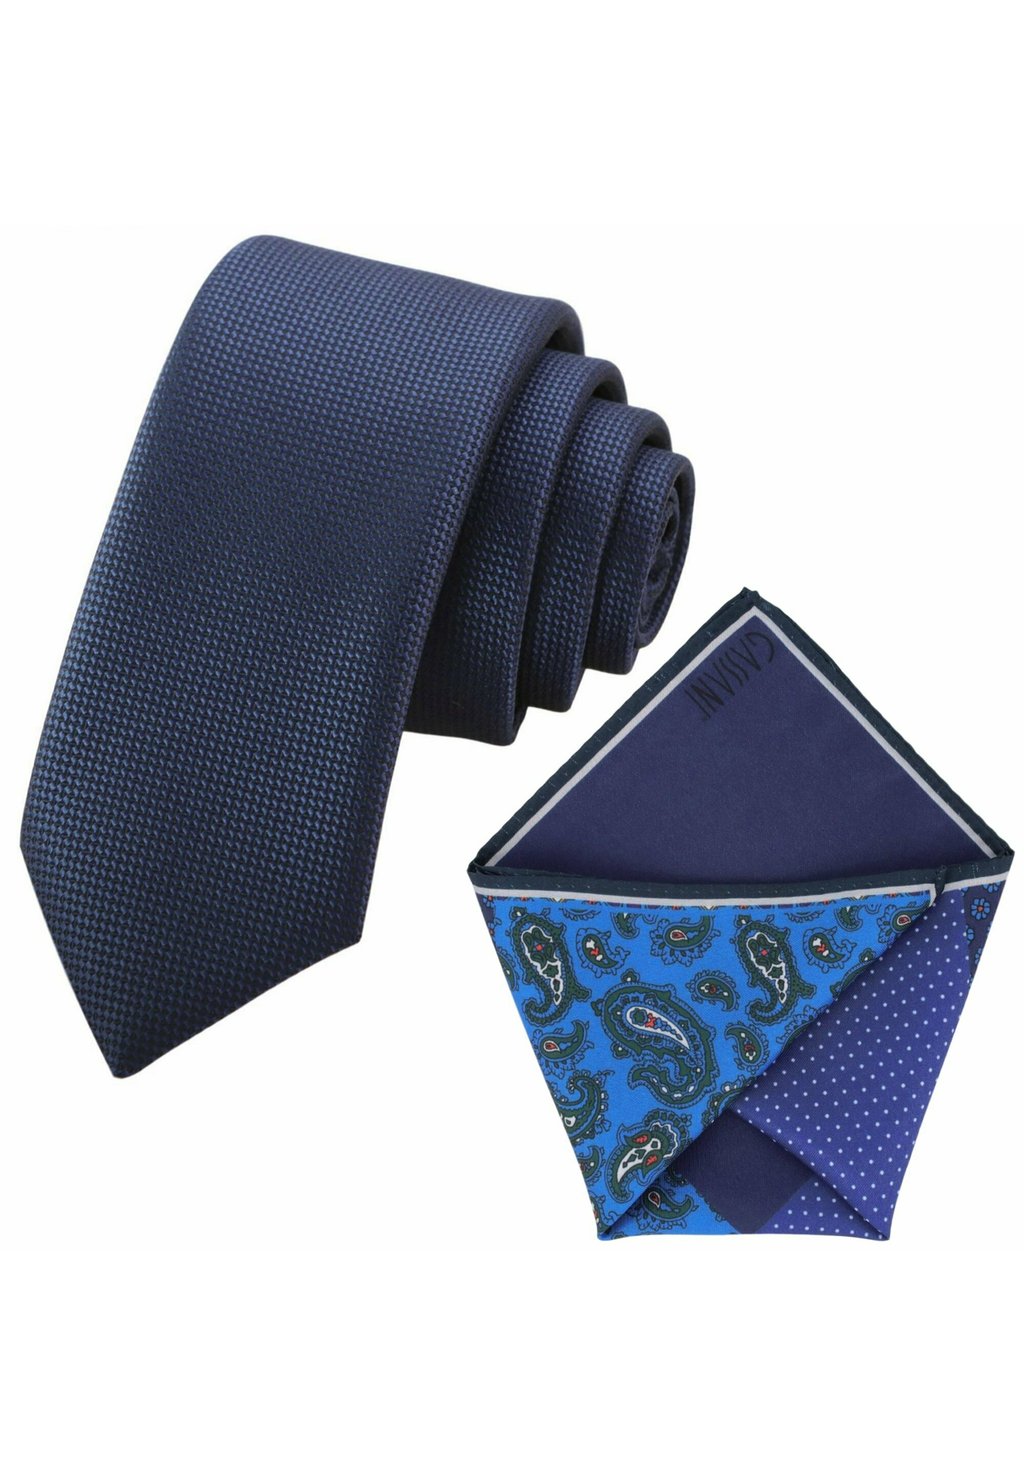 Нагрудный платок 2 SET DON SLIM KRAWATTE & 4 DESIGN PAISLEY EINSTECKTUCH Gassani, цвет royal-blau ultramarin | capriblau moos-gruen paisley